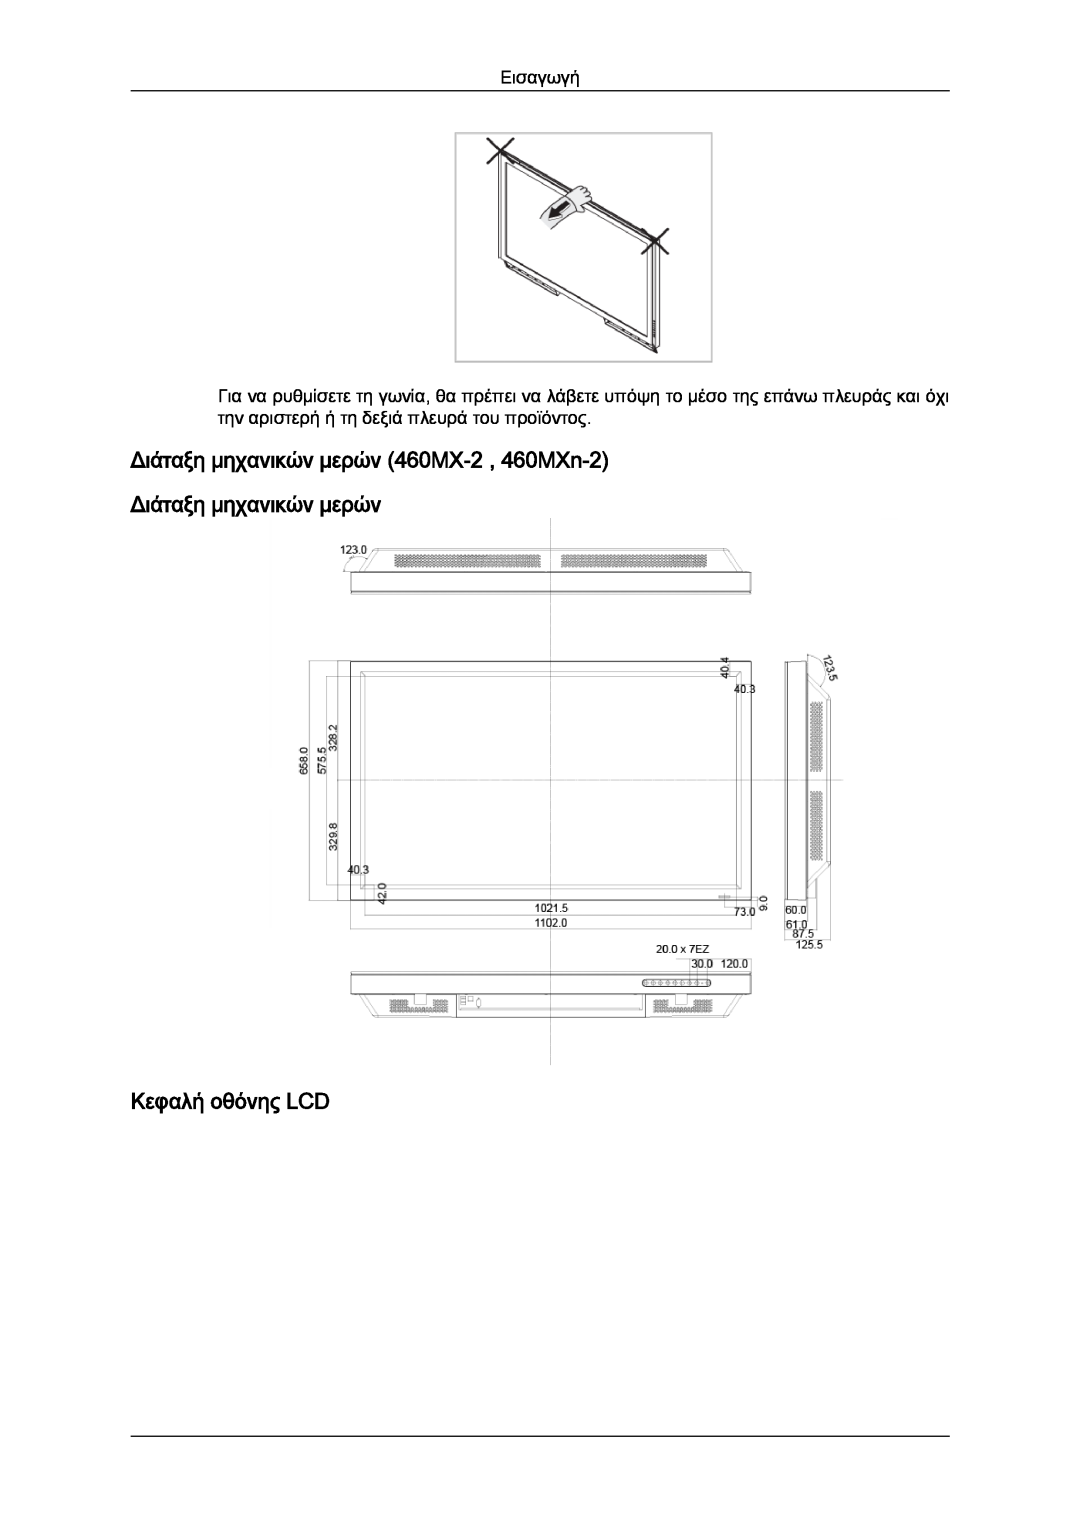 Samsung LH40MGQLBC/EN Διάταξη μηχανικών μερών 460MX-2 , 460MXn-2 Διάταξη μηχανικών μερών, Κεφαλή οθόνης LCD, Εισαγωγή 